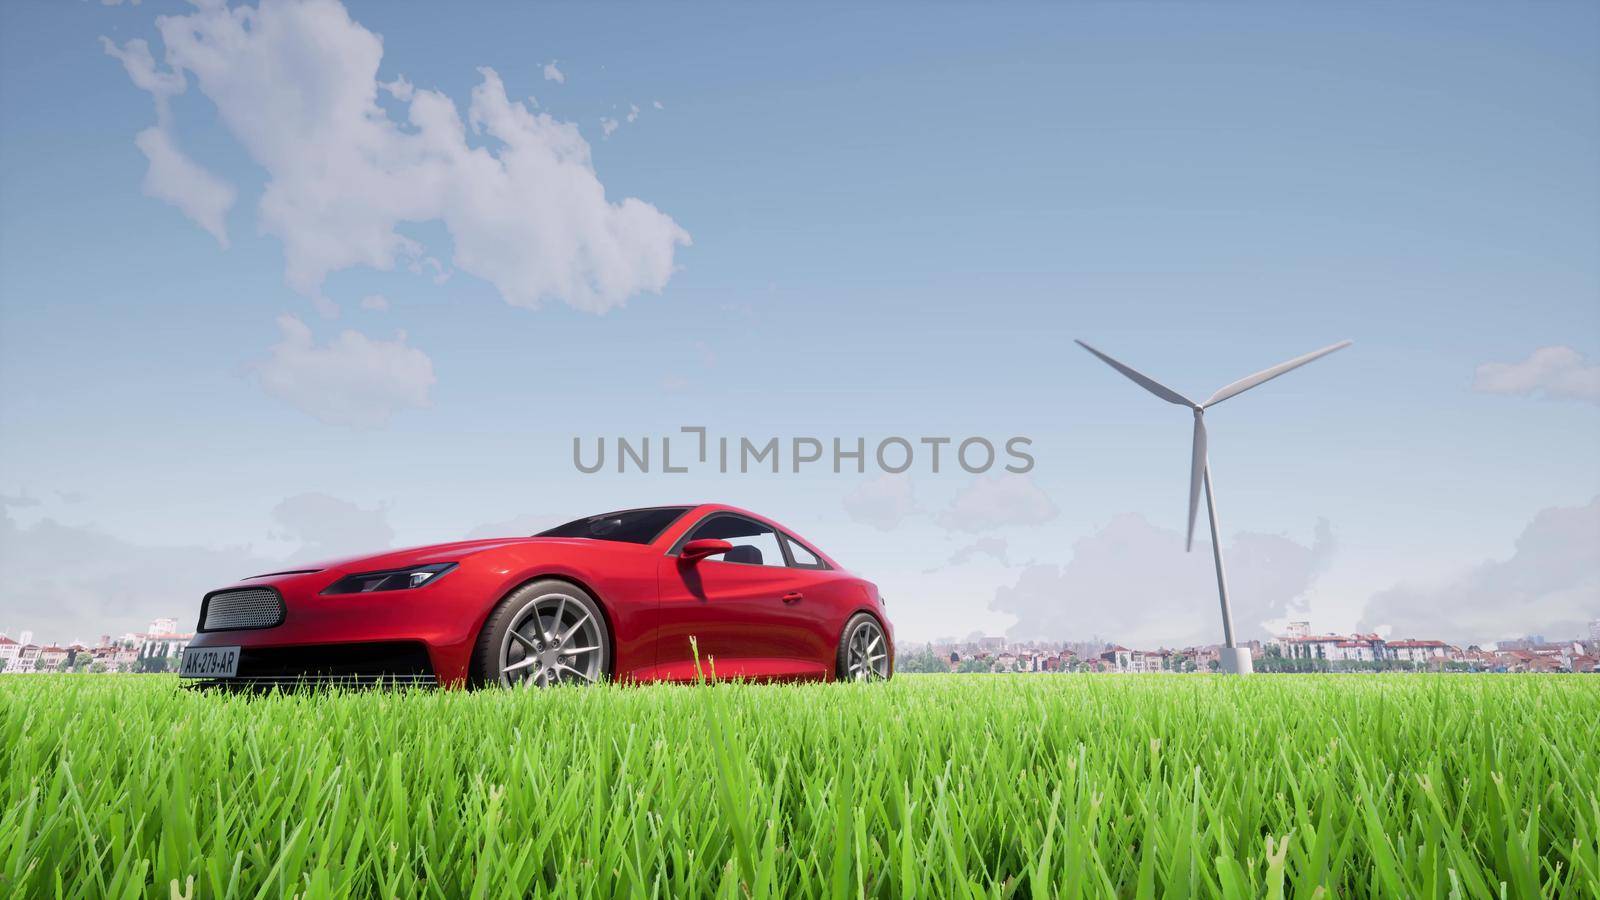 Wind generators machine red car green grass field eco landscape 3d render by Zozulinskyi